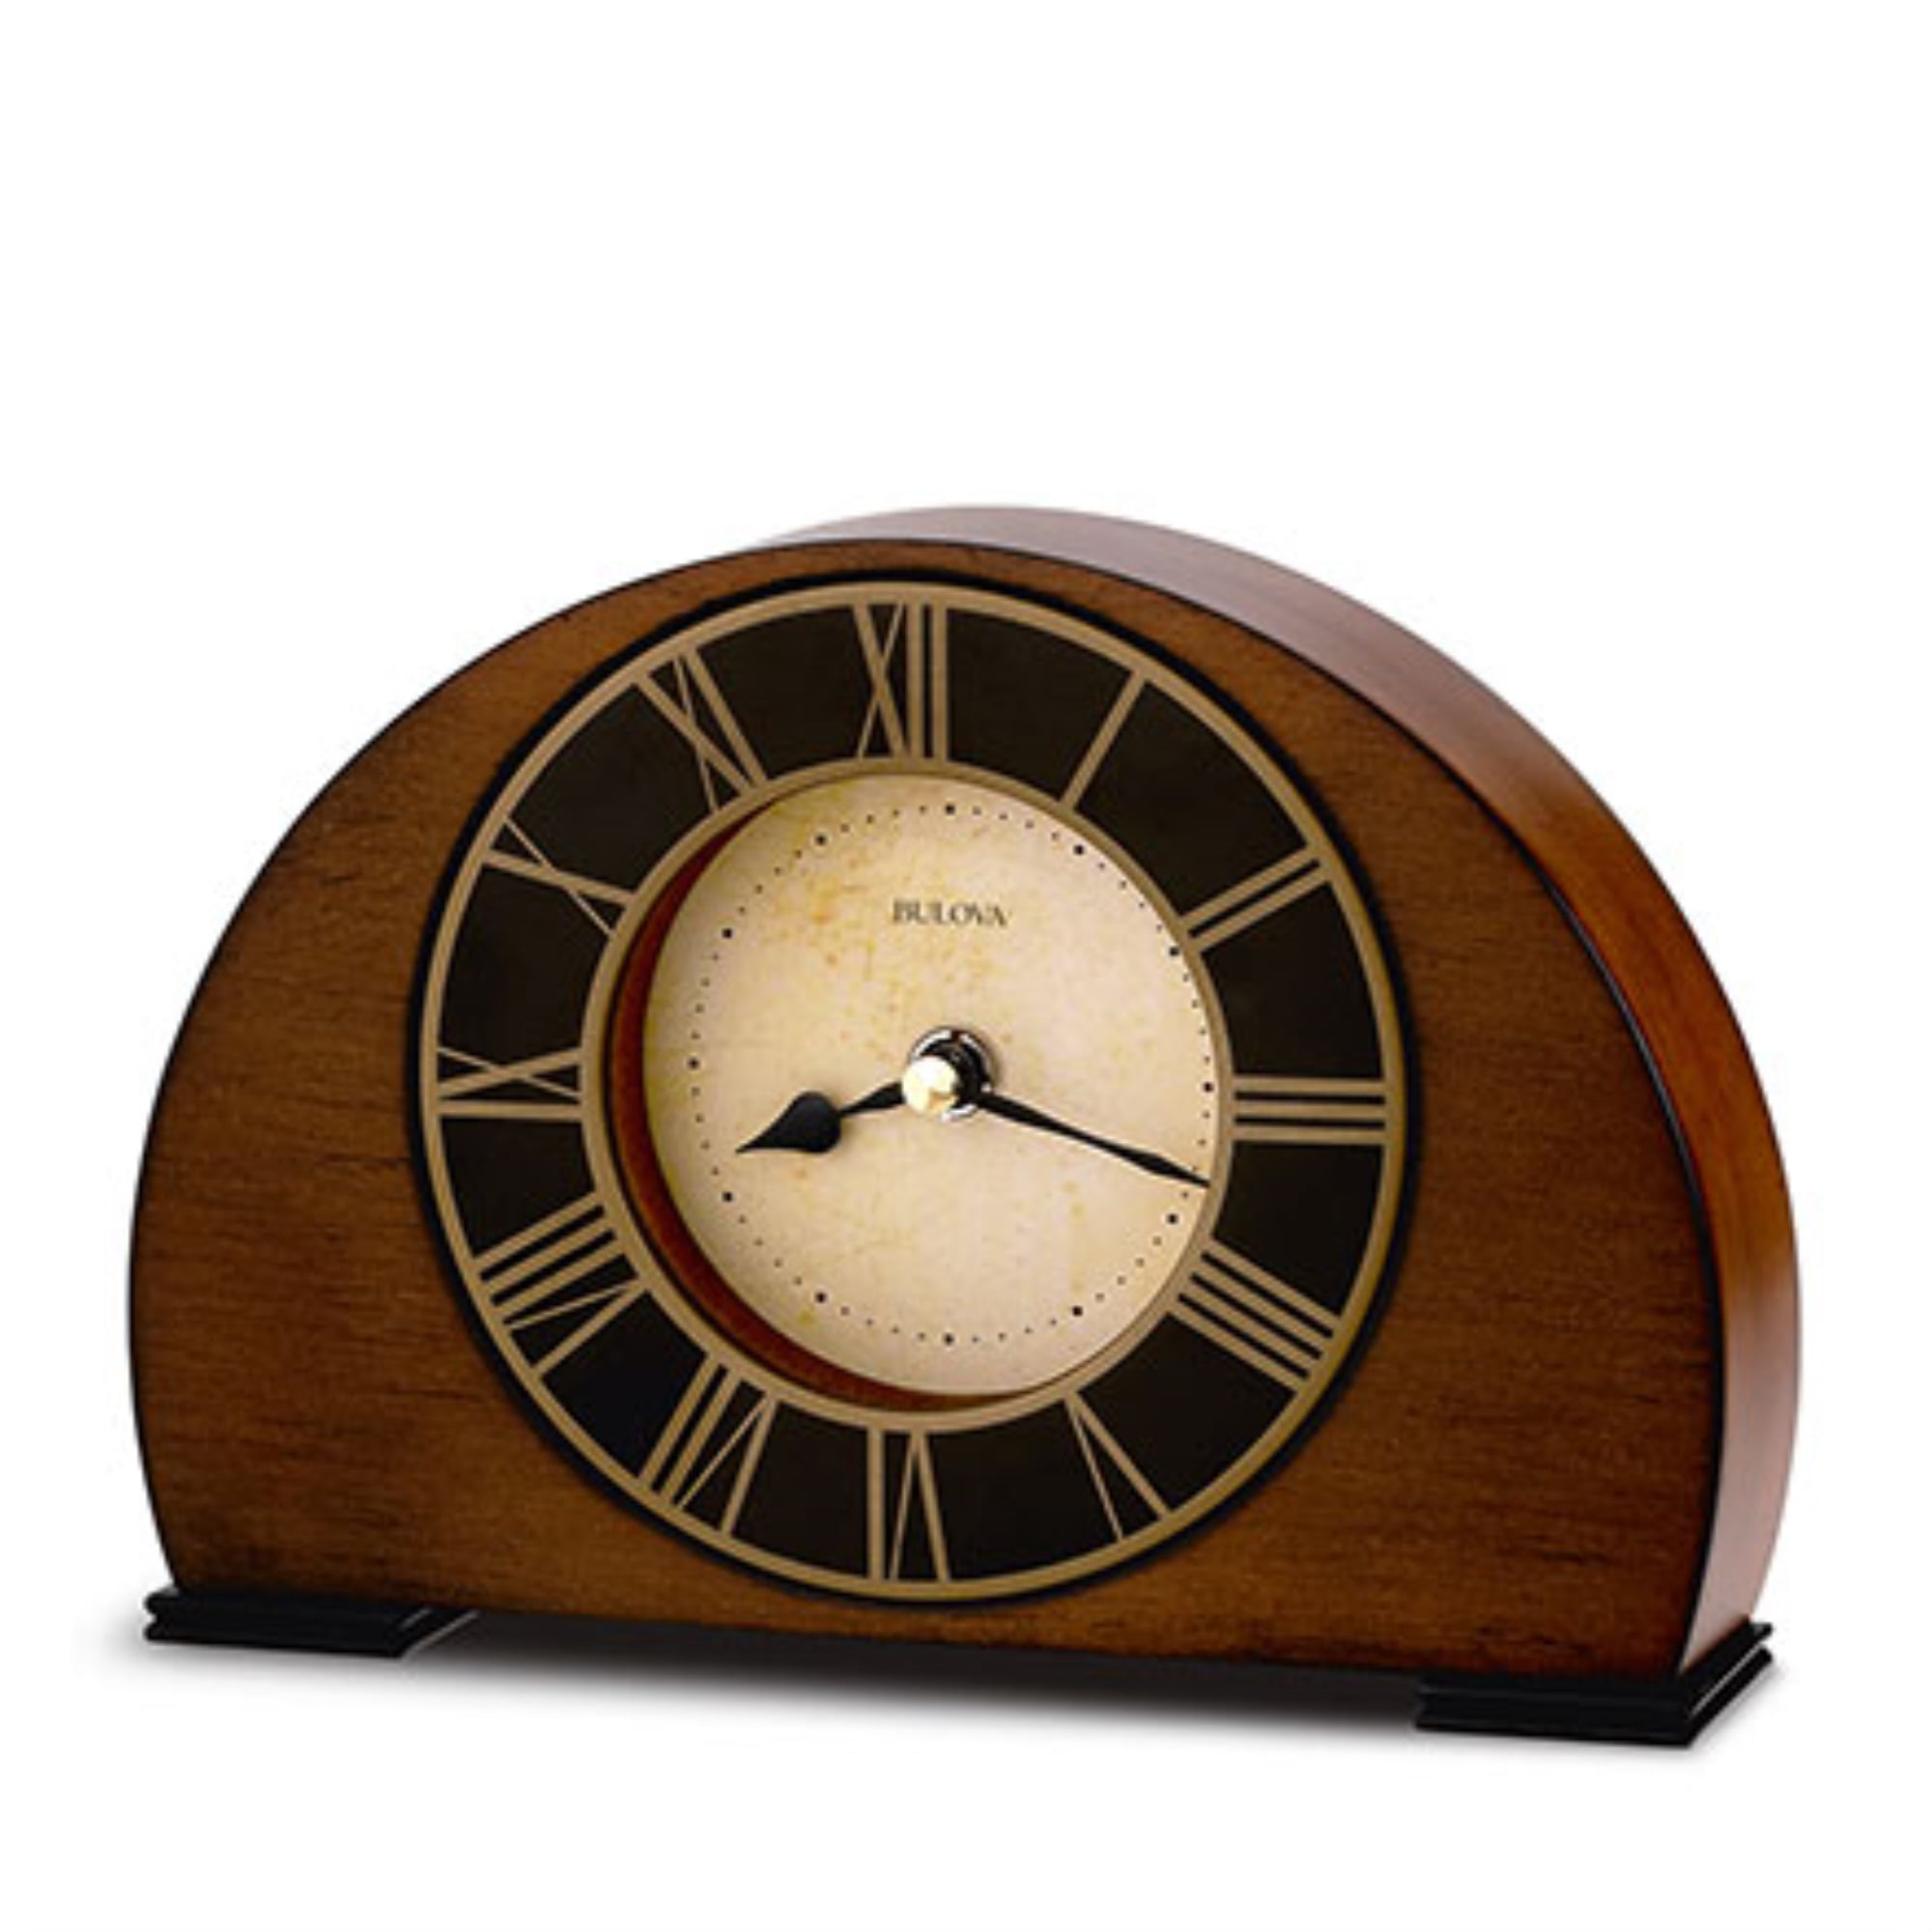 Bulova B1975 Chadbourne Old World Clock Walnut Finish for sale online 